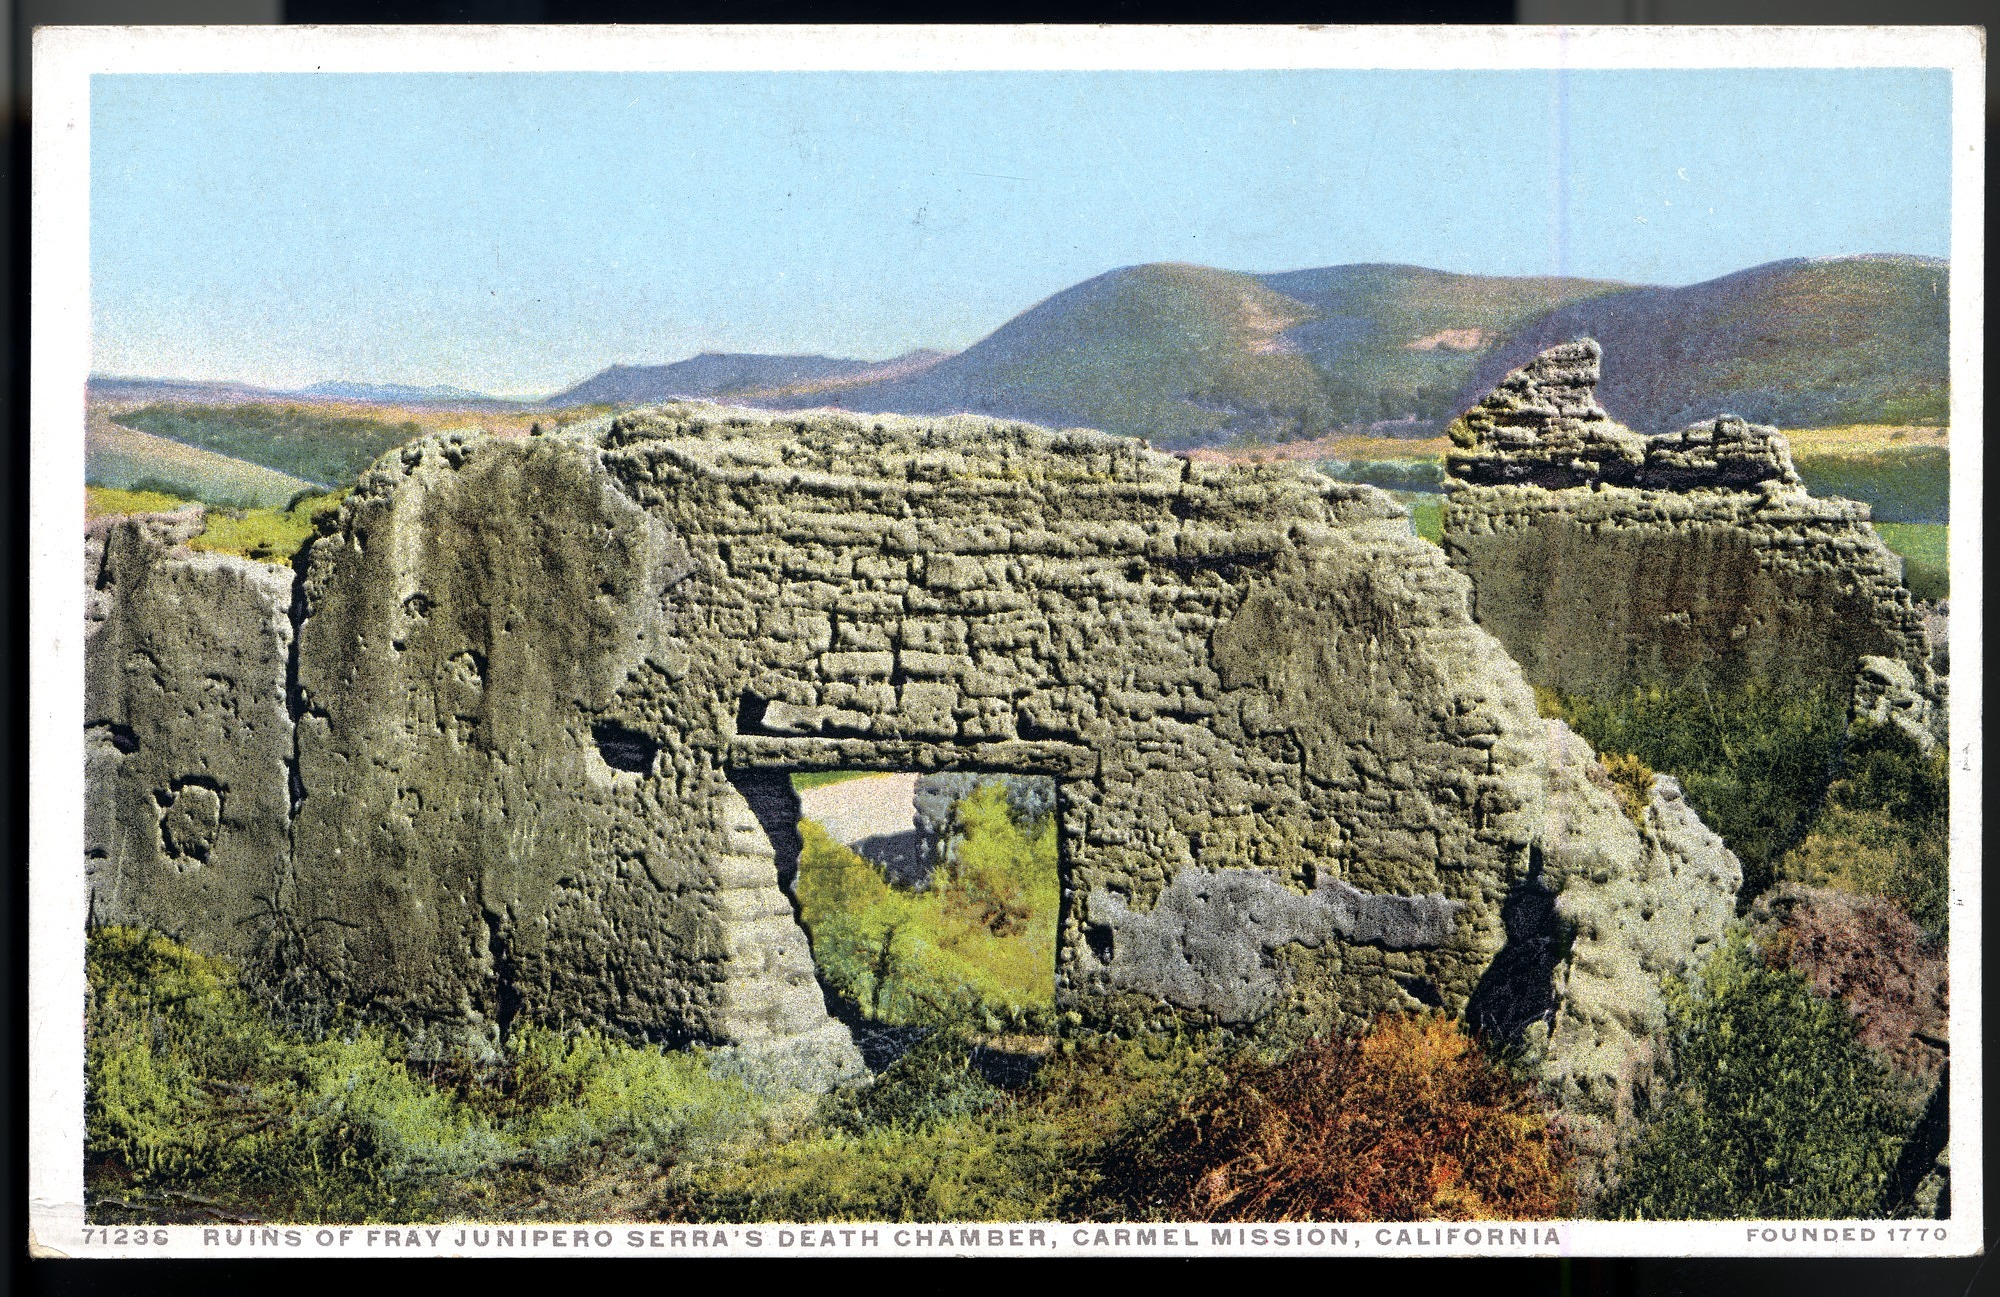 Postcard 09 – Ruins of Fray Junipero Serra’s Death Chamber, Carmel Mission, California. Founded 1770. Detroit Publishing Company. ca 1910. NMAH 1986.0639.2016.